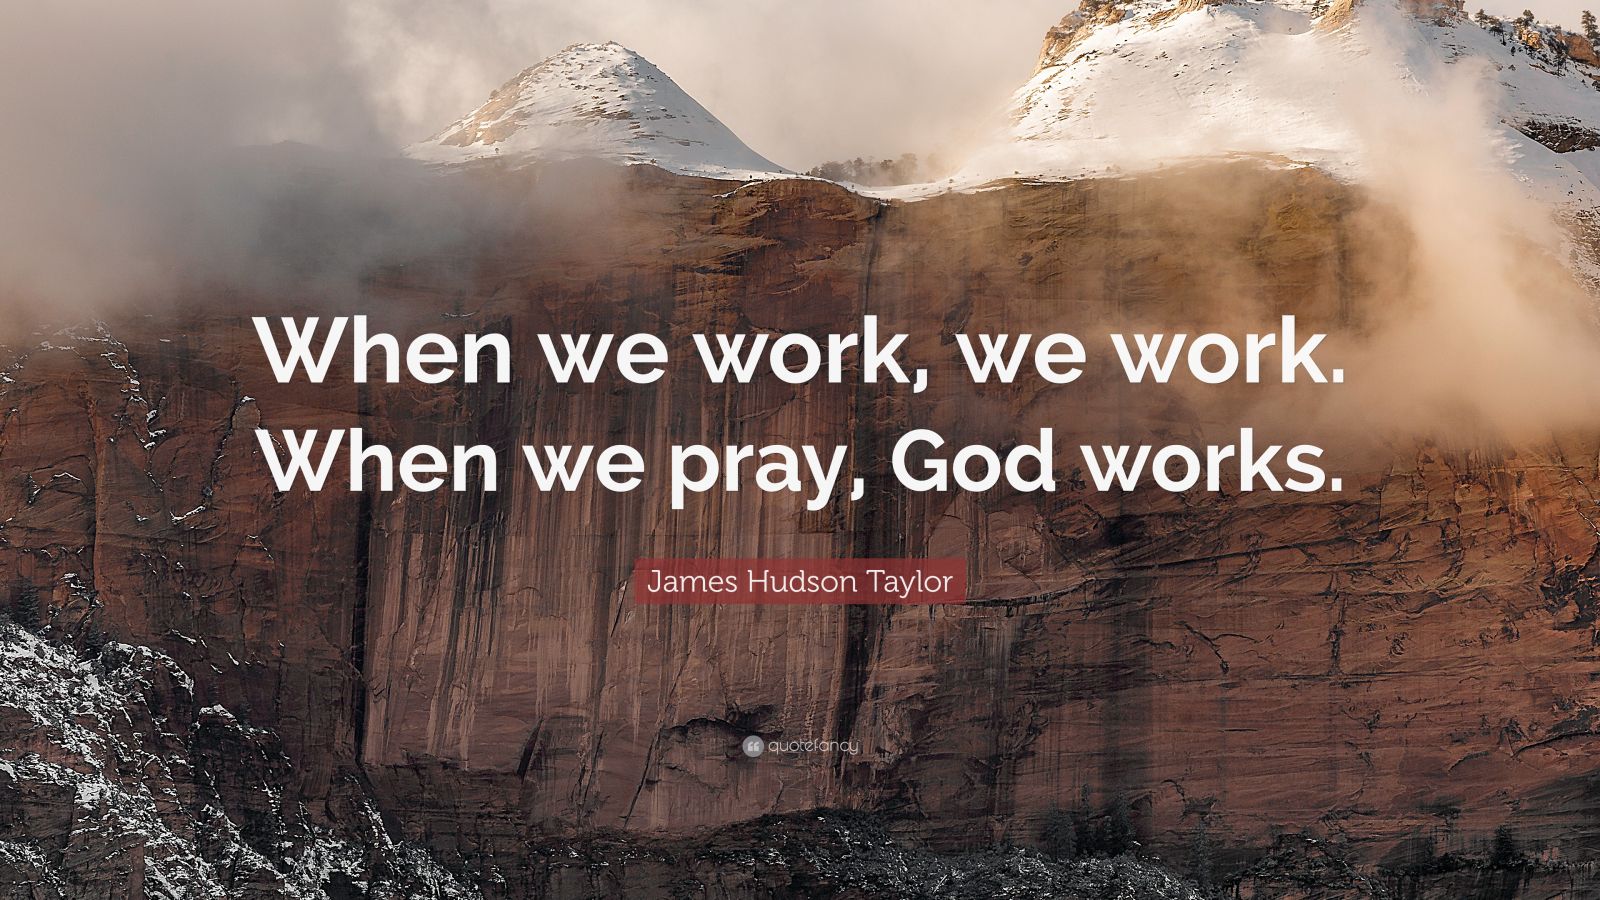 James Hudson Taylor Quote: “When we work, we work. When we pray, God